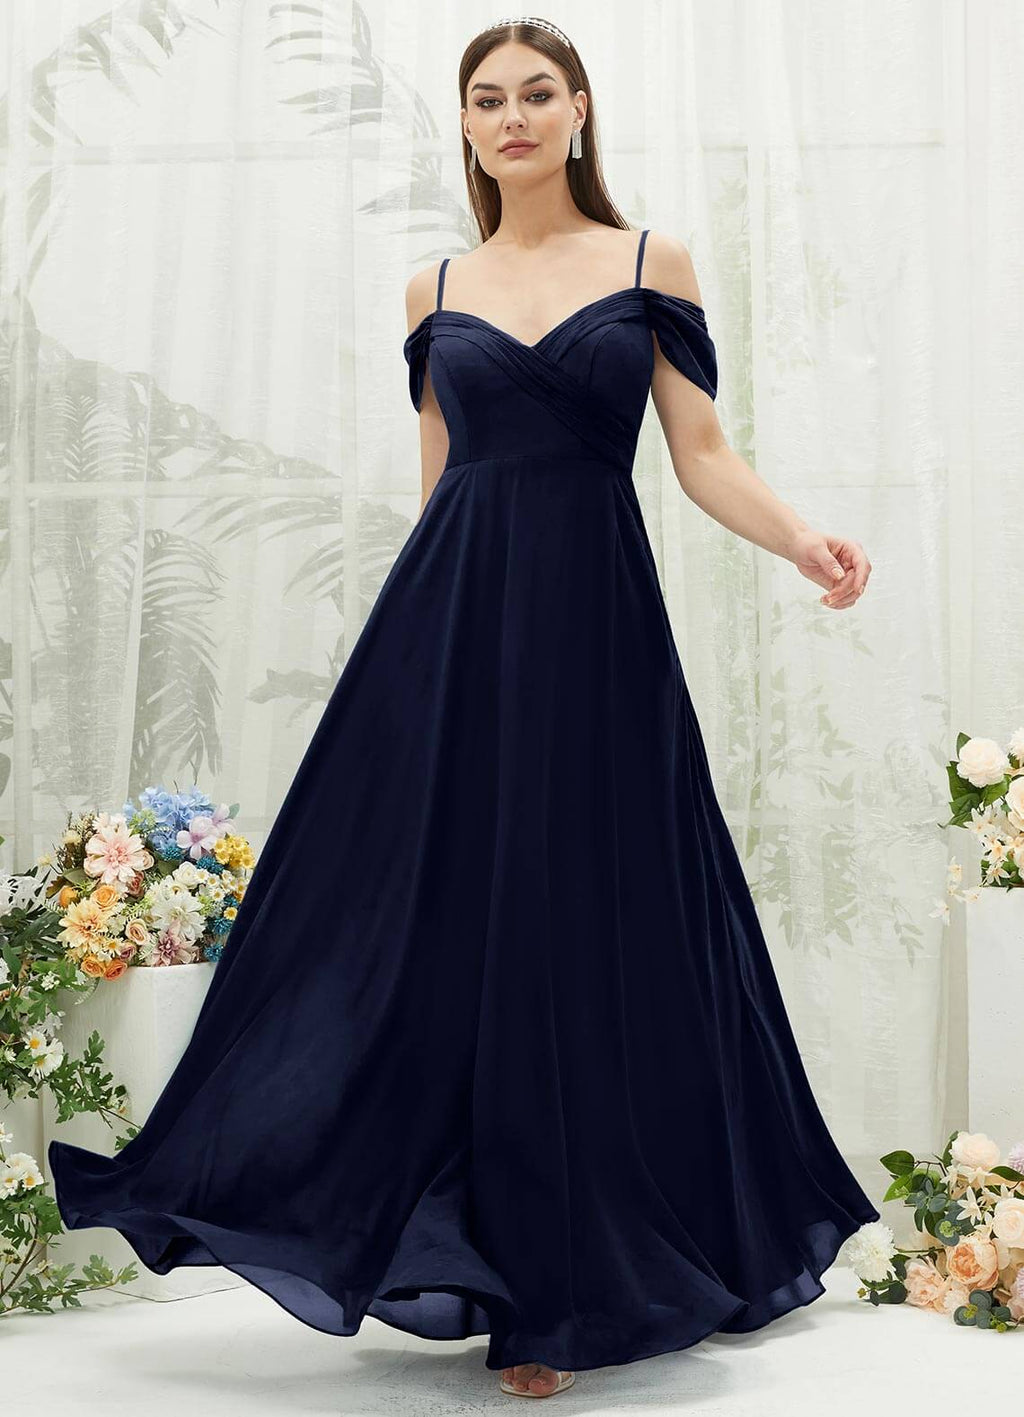 NZ Bridal Dark Navy Convertible Chiffon Flowy bridesmaid dresses BG30217 Spence a